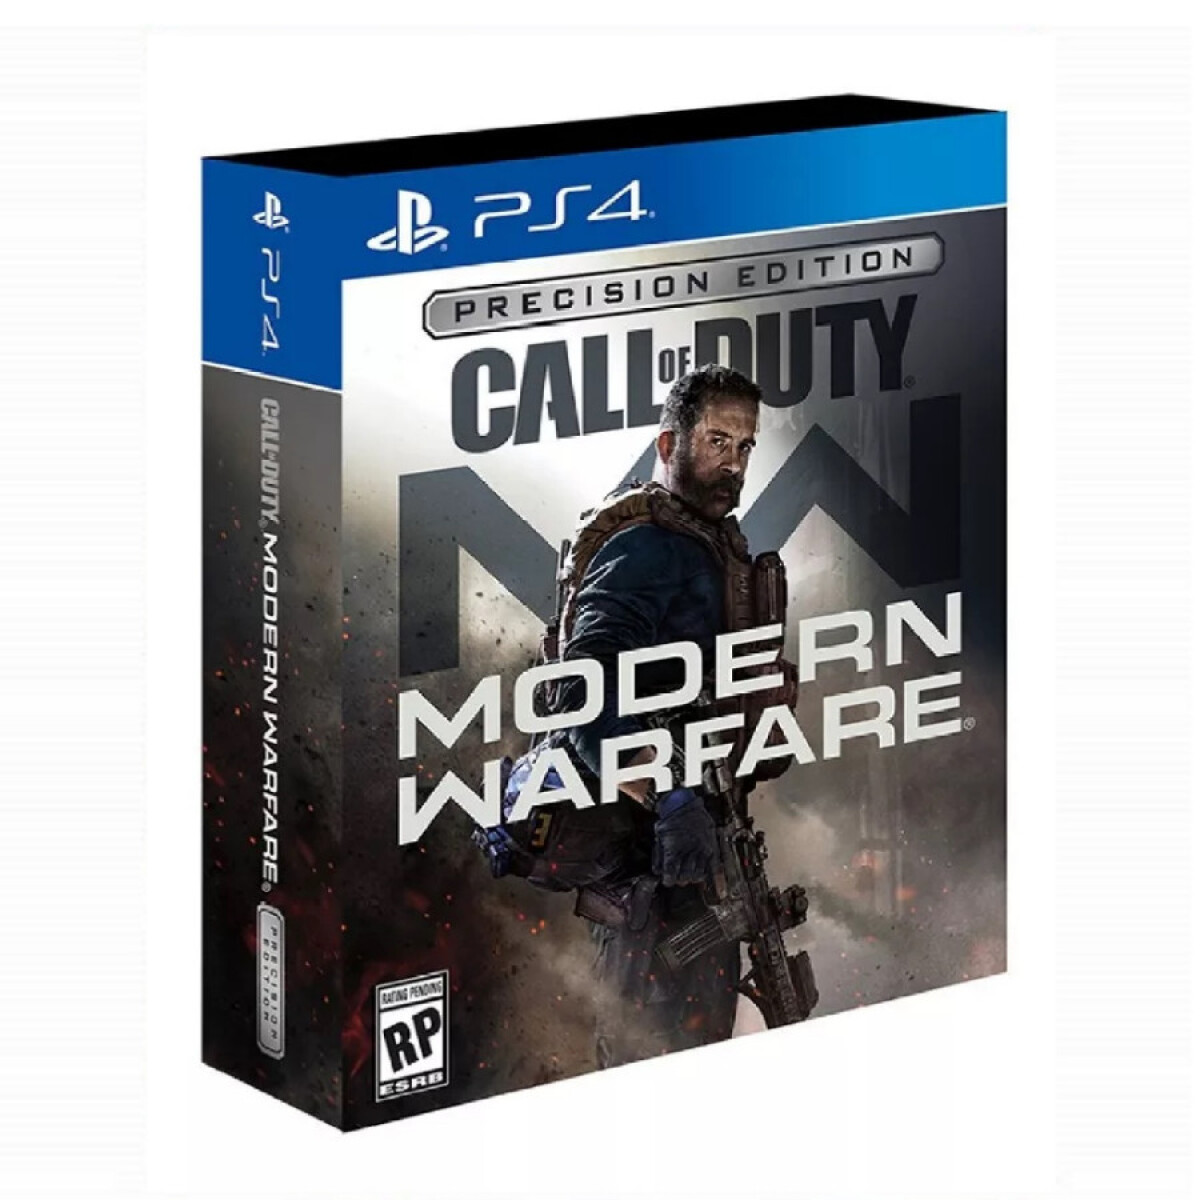 Call of Duty Modern Warfare [Precision Edition] 